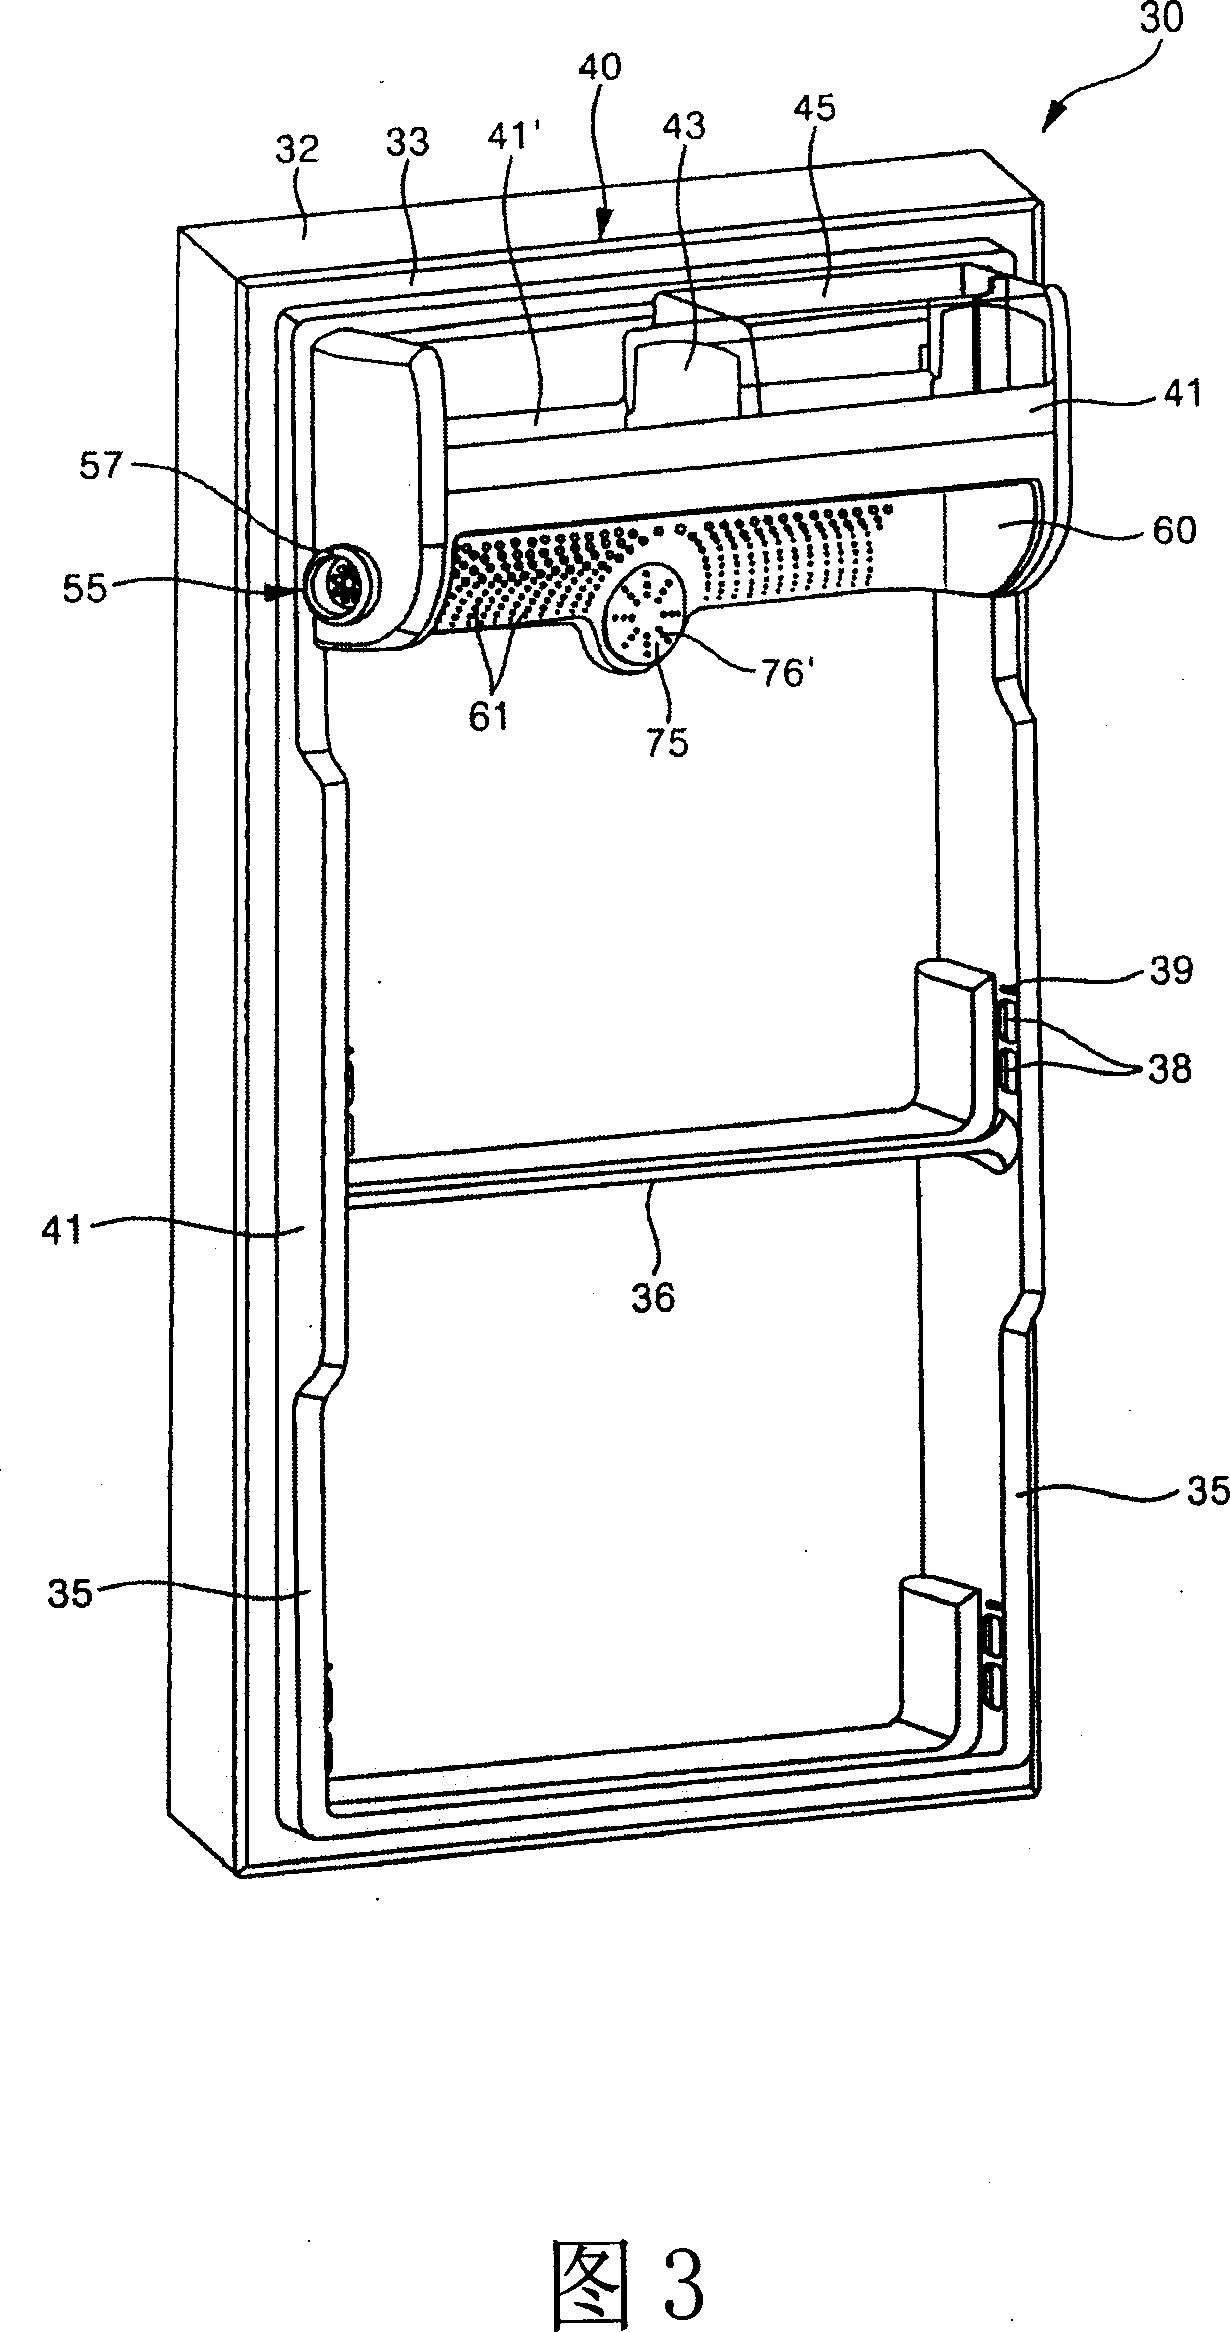 Door pipeline assembly of refrigerator